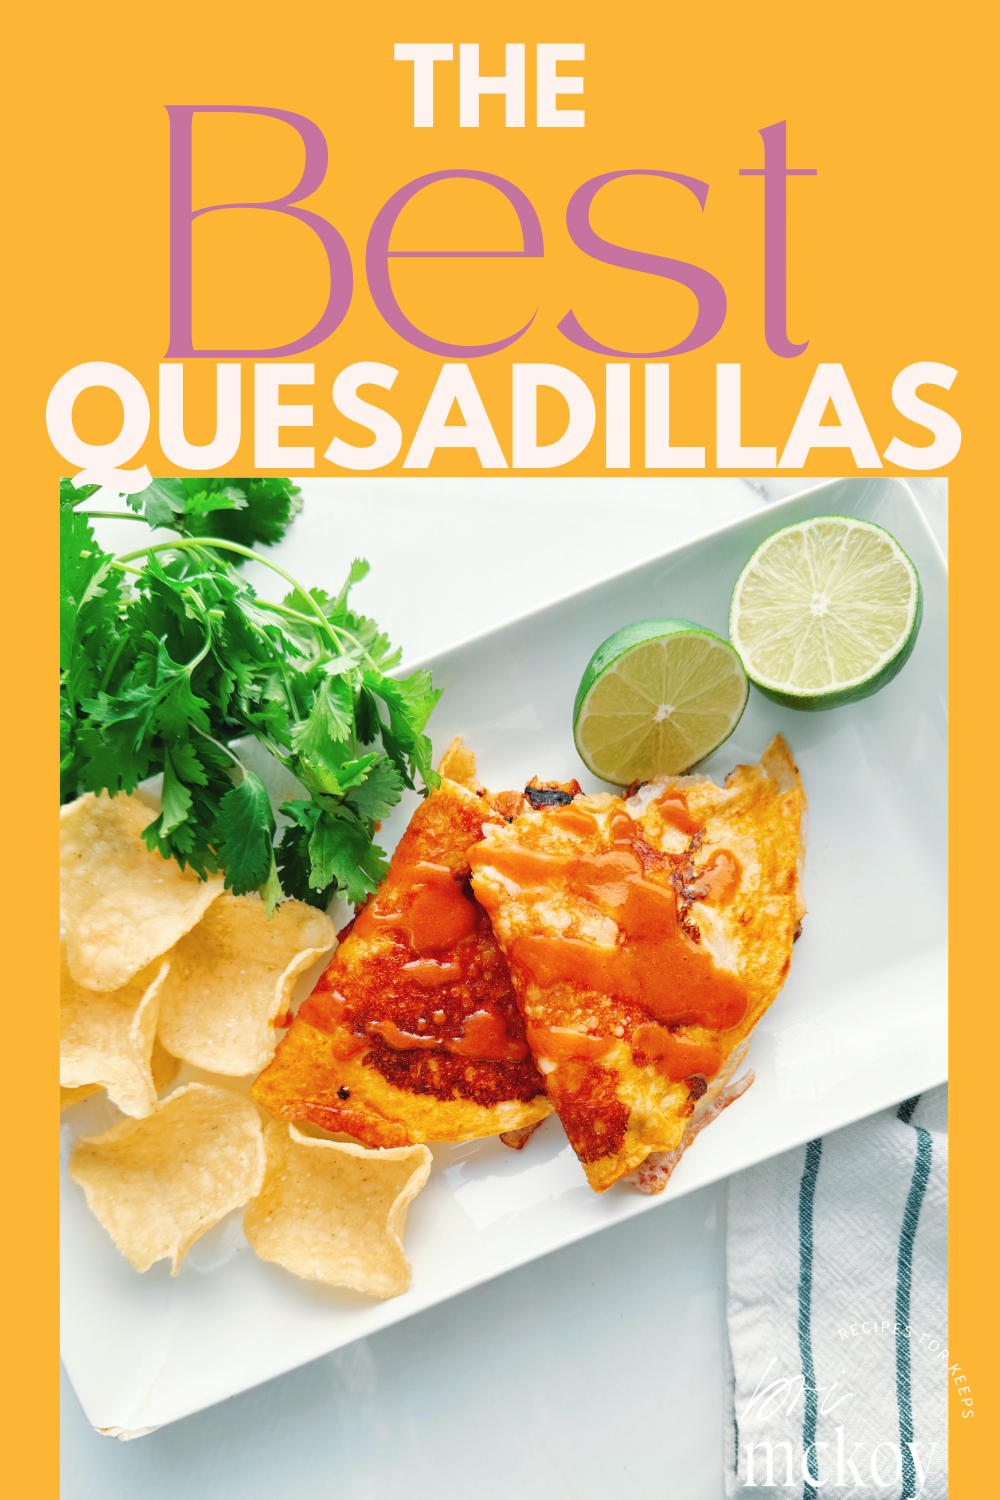 The Best Quesadillas from Bri McKoy